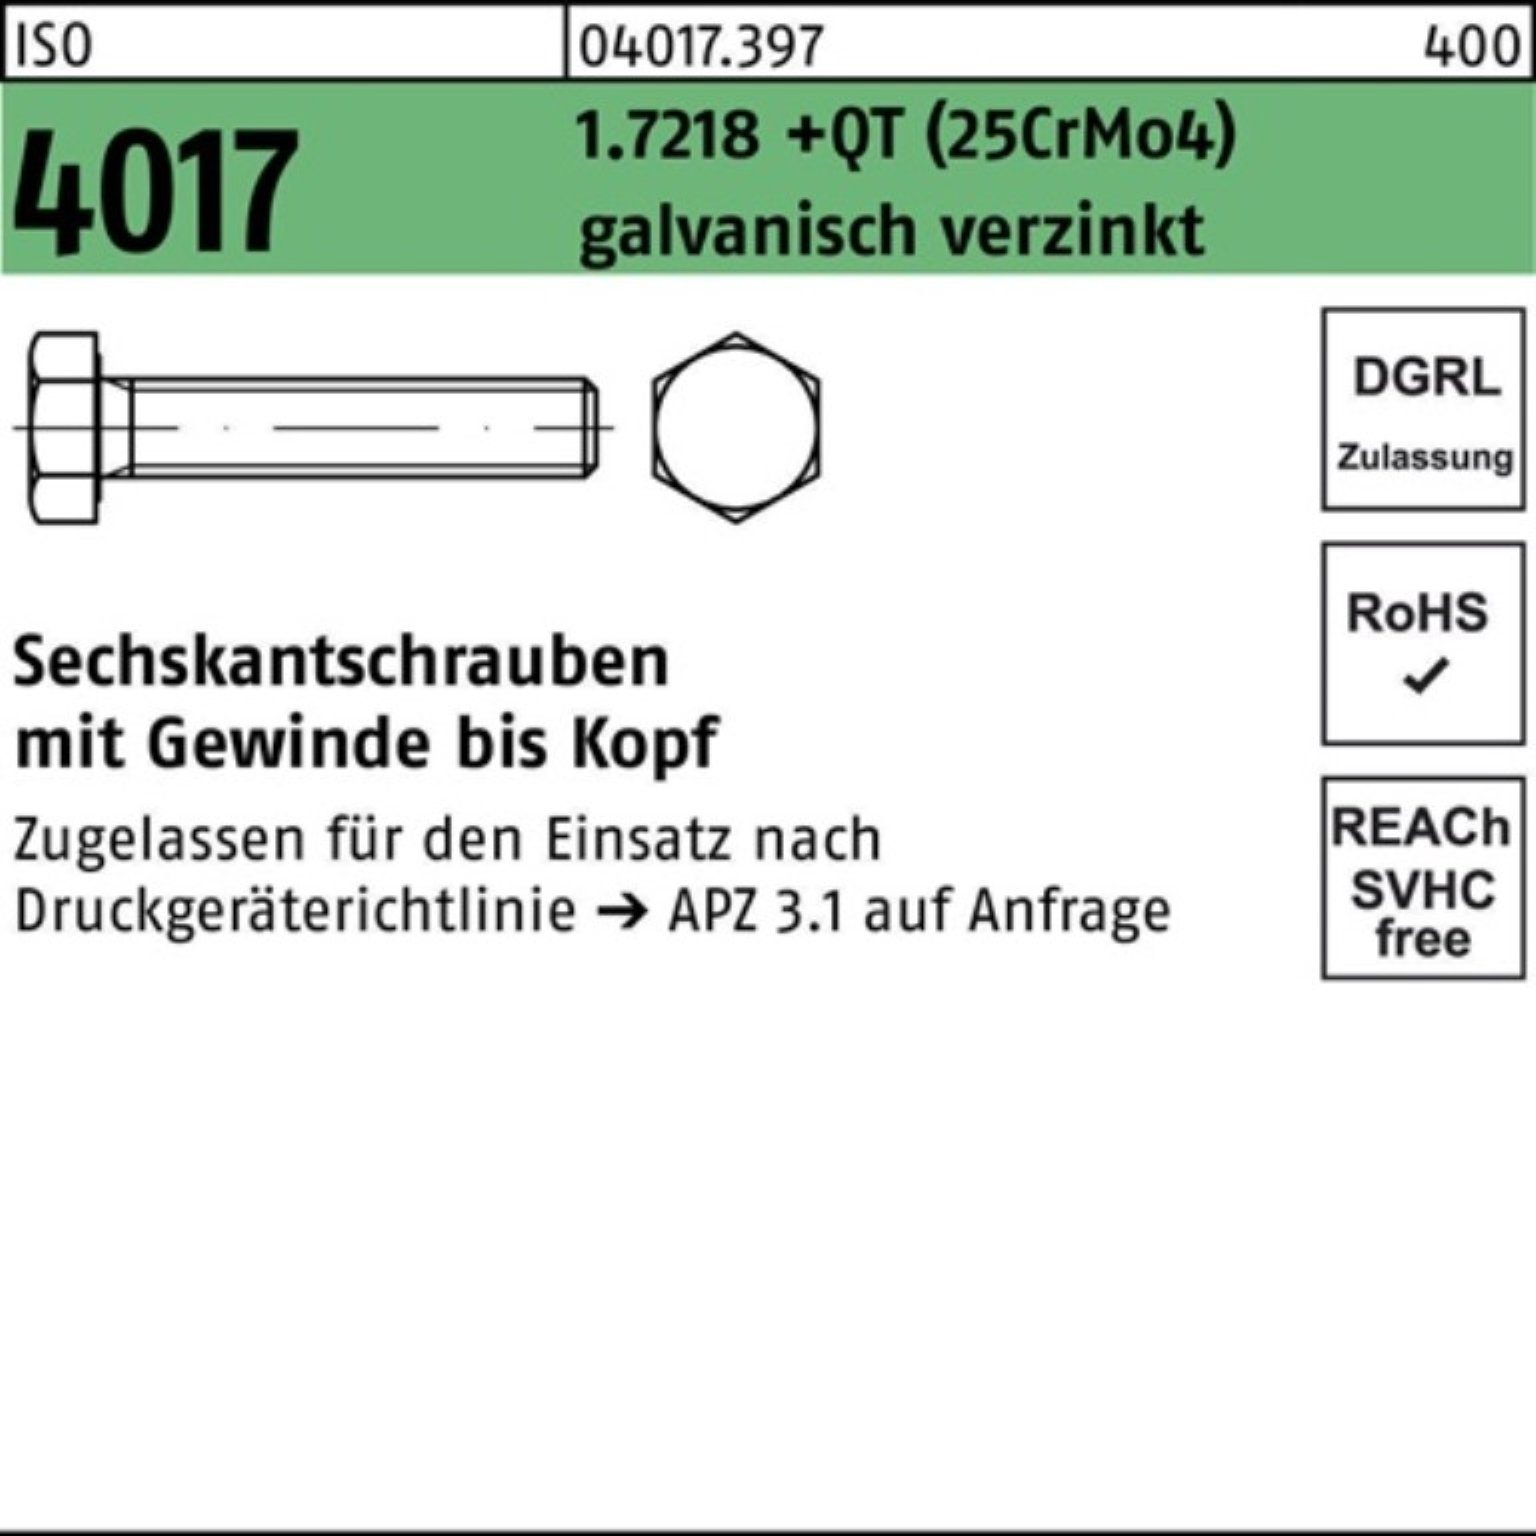 Sechskantschraube (25CrMo4) Sechskantschraube 4017 ISO 100er VG M16x110 Bufab 1.7218 Pack +QT